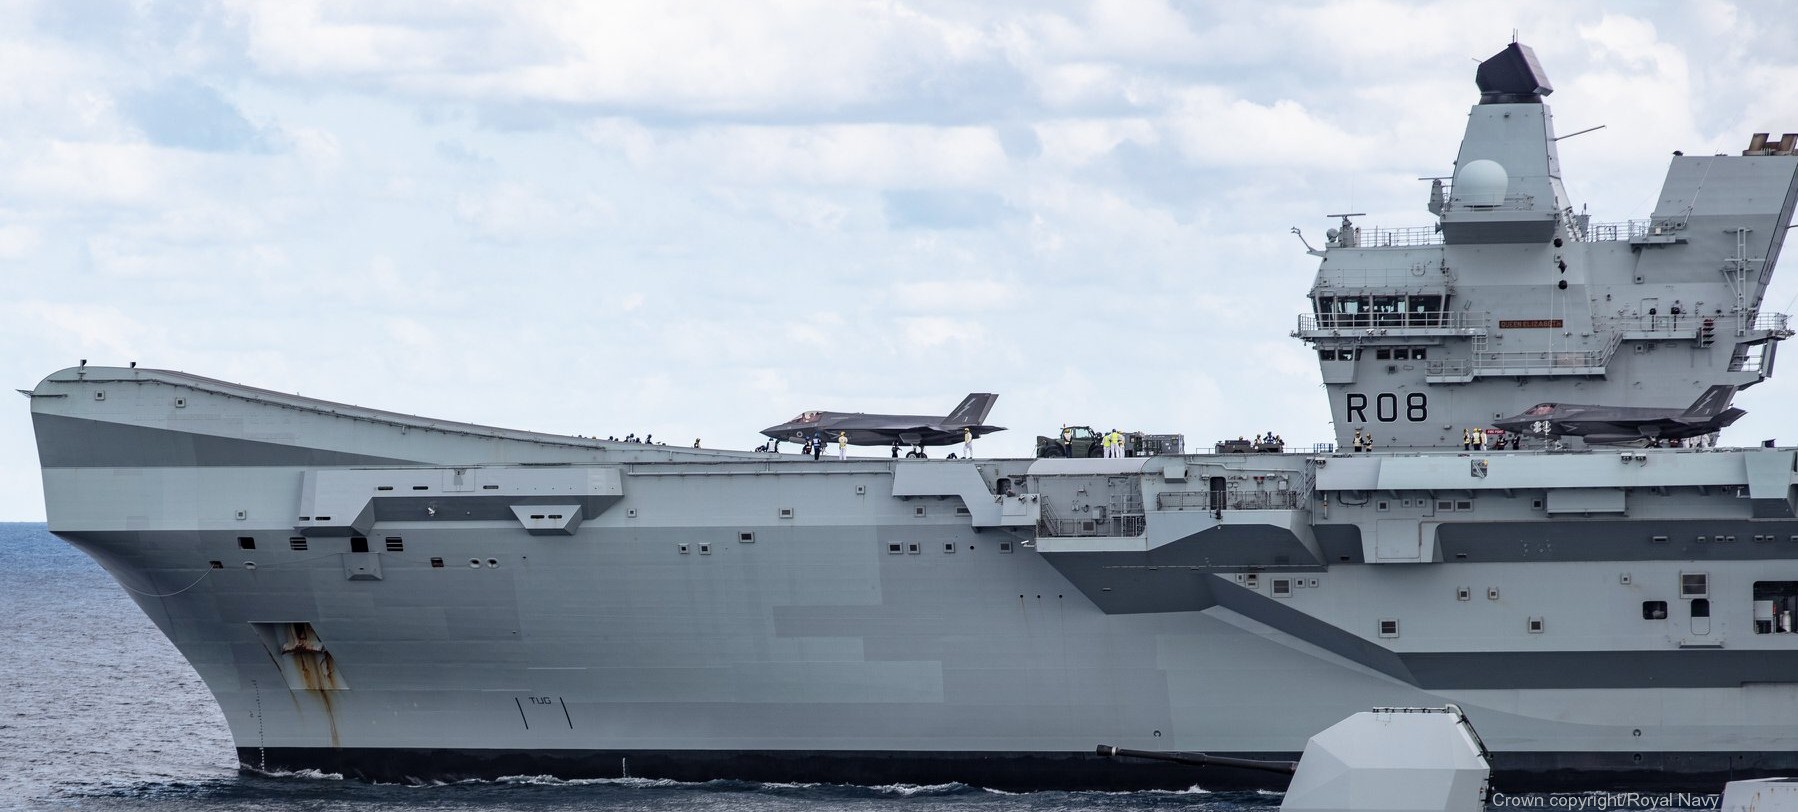 hms queen elizabeth r-08 aircraft carrier royal navy 81